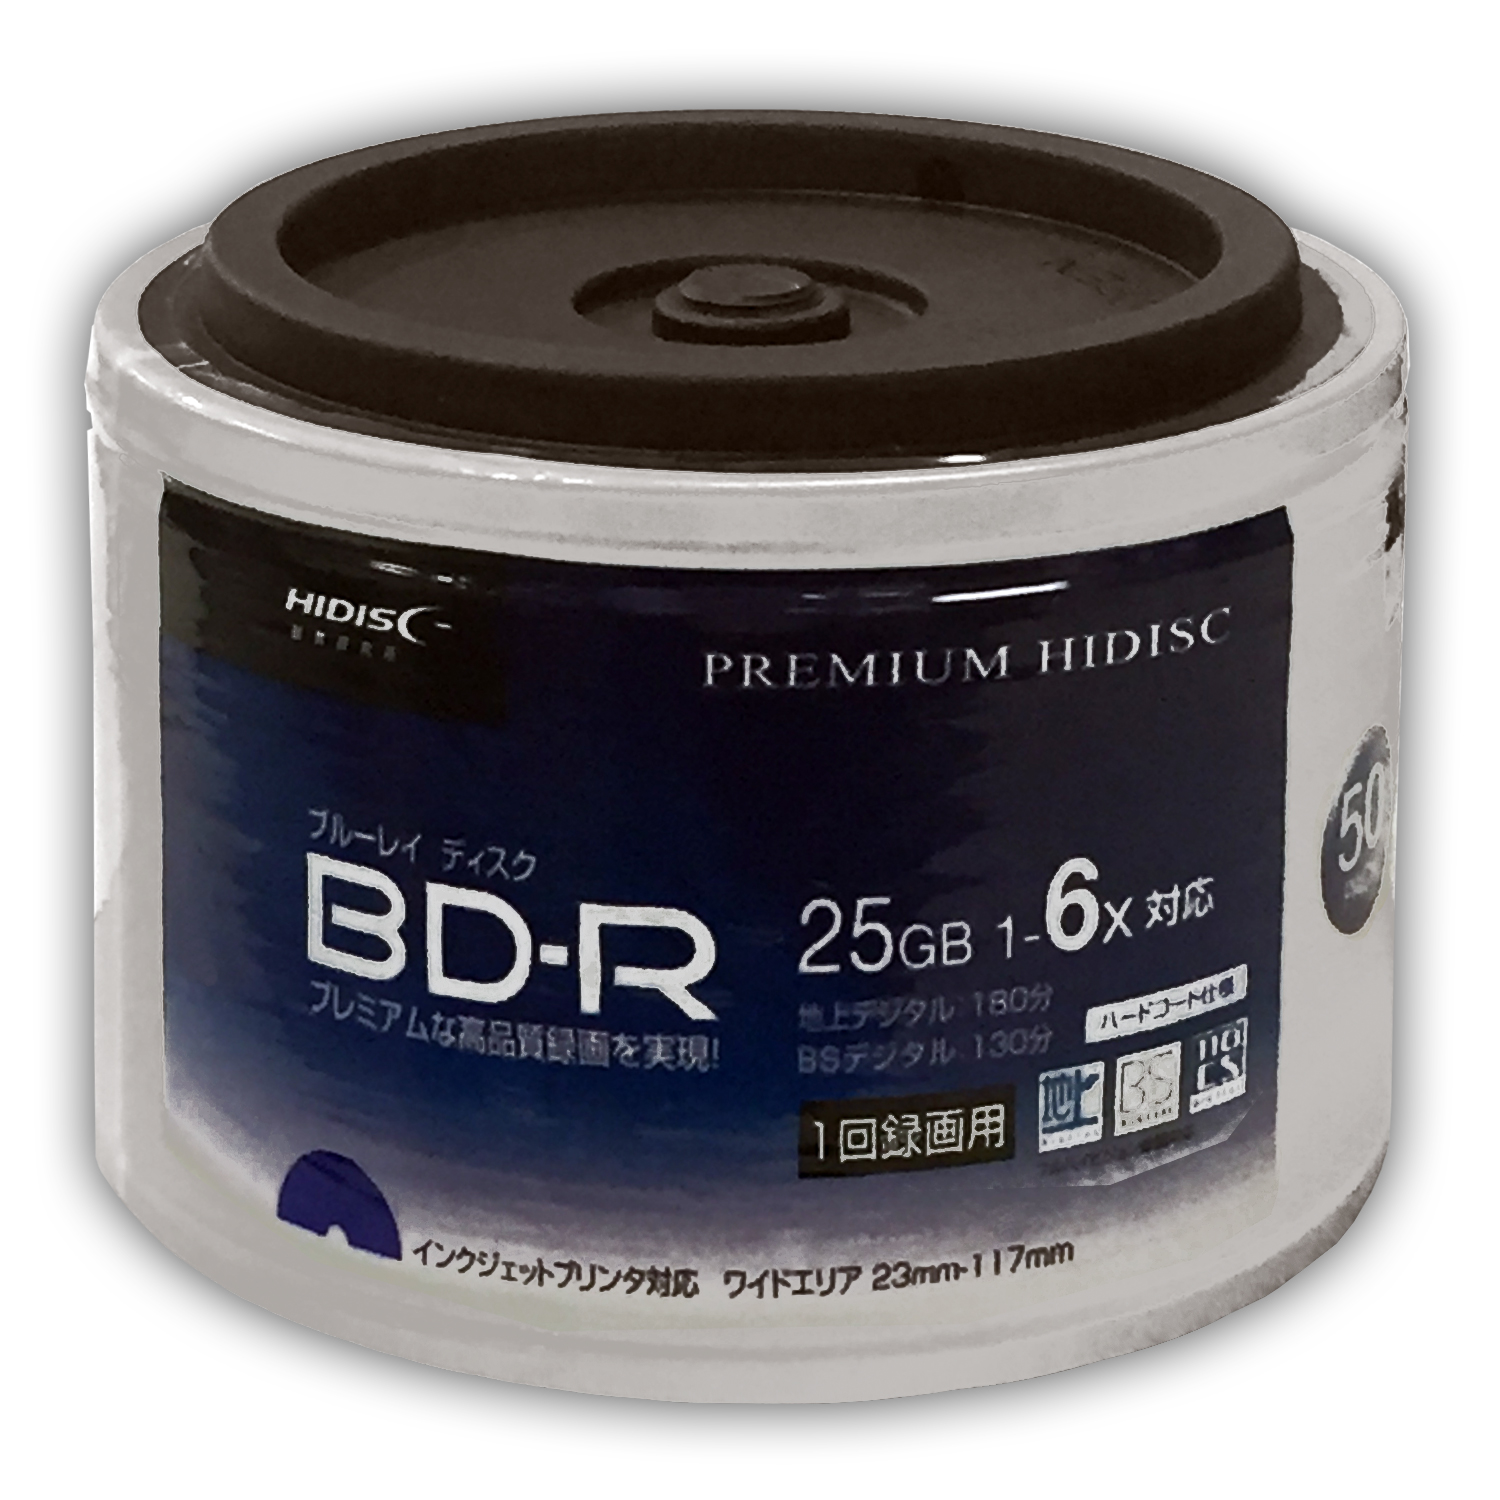 PREMIUM HIDISC BD-R 1回録画 6倍速 25GB 50枚 スタッキングバルク